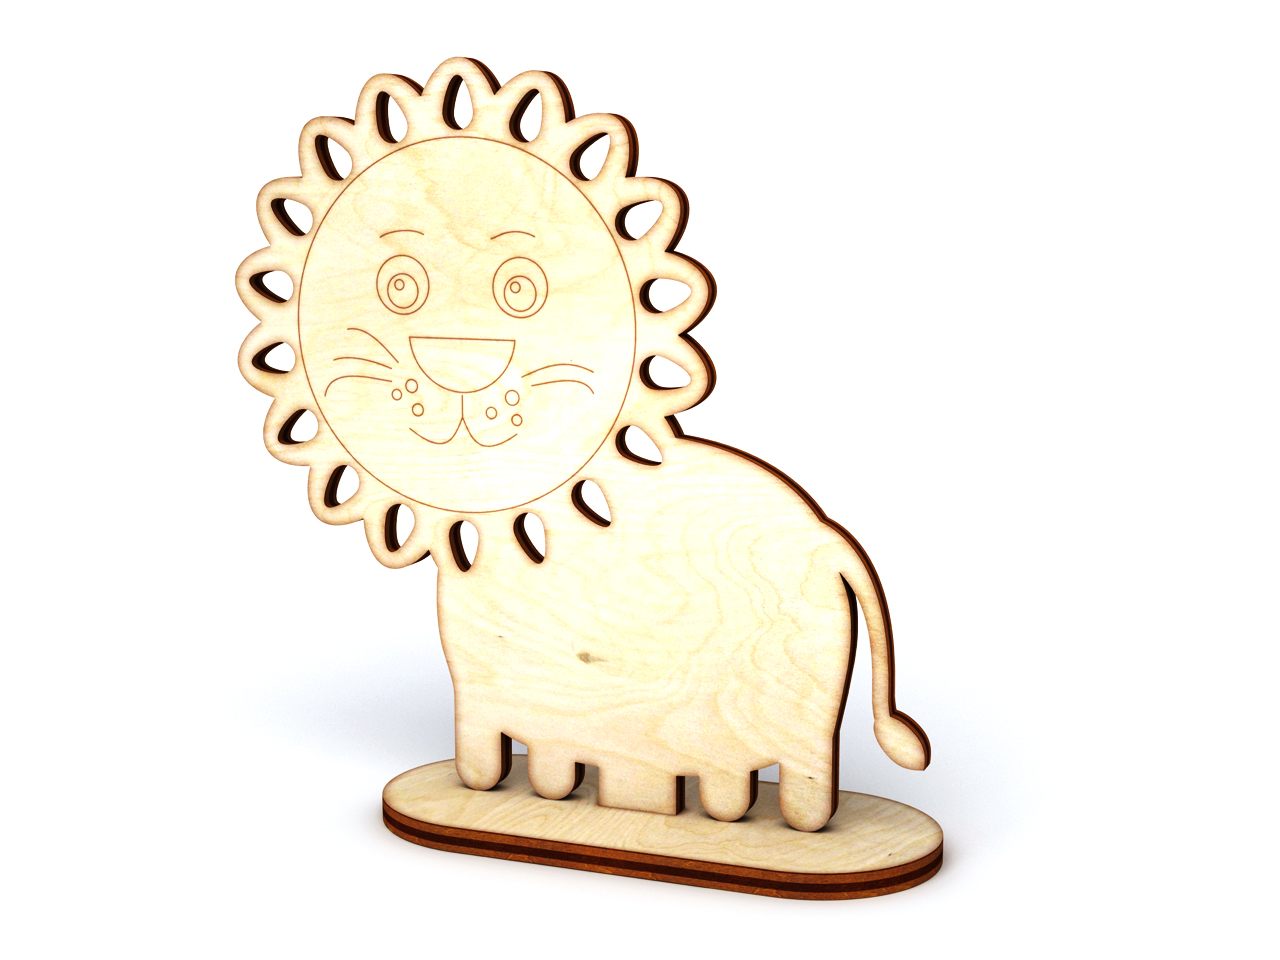 Ип артикул. Лев на подставке. Заготовка деревянная Лев. Львы на подставке деревянные. Игрушка Лев деревянная.